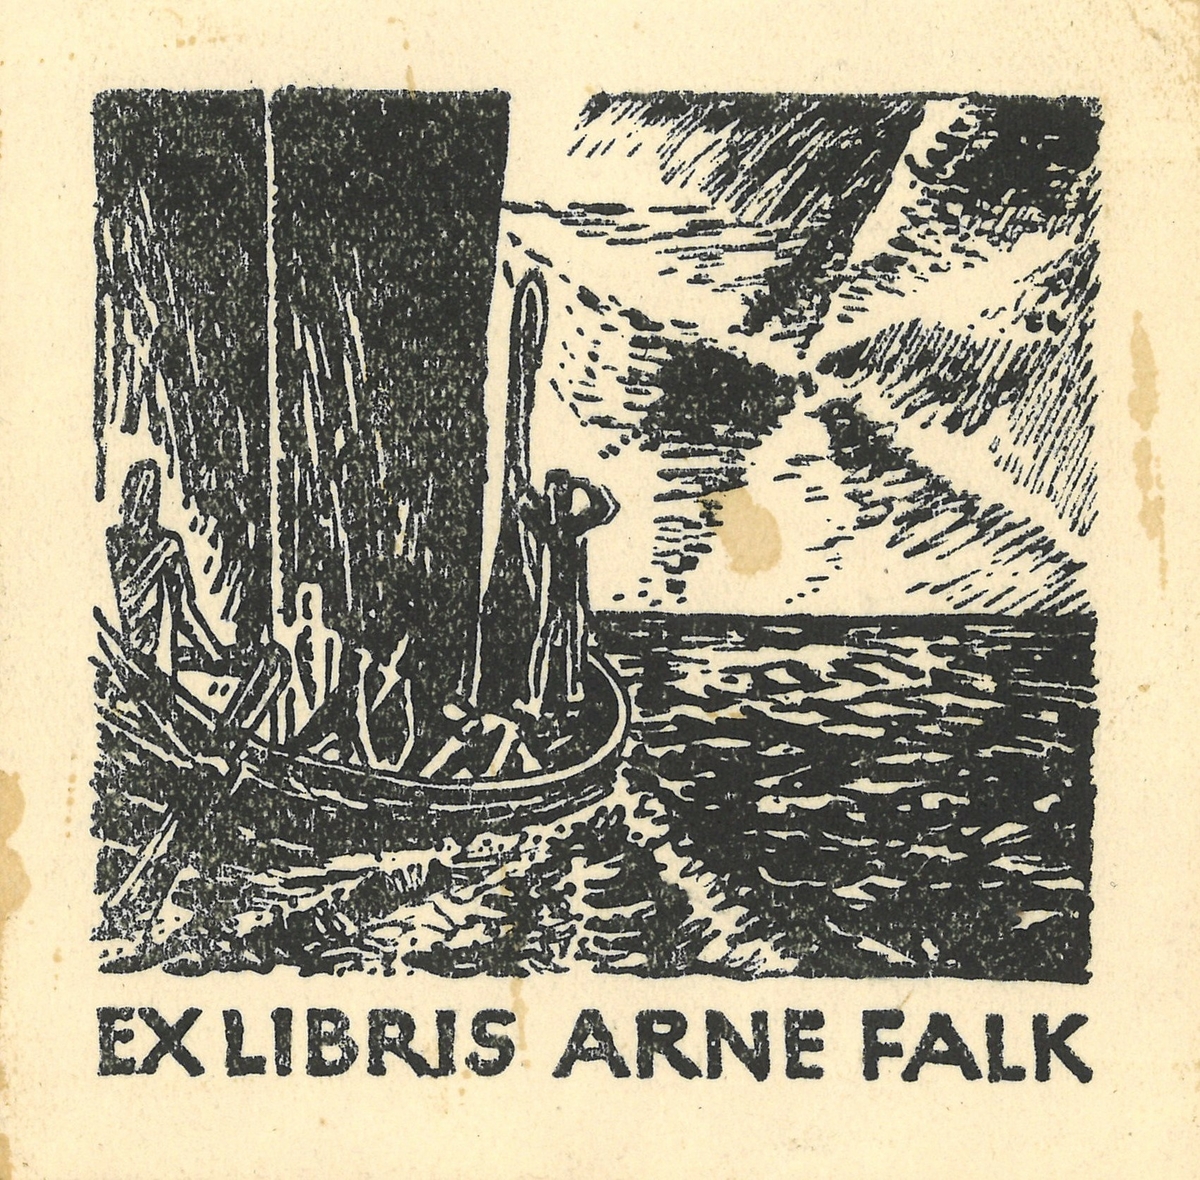 Ex libris for Arne Falk